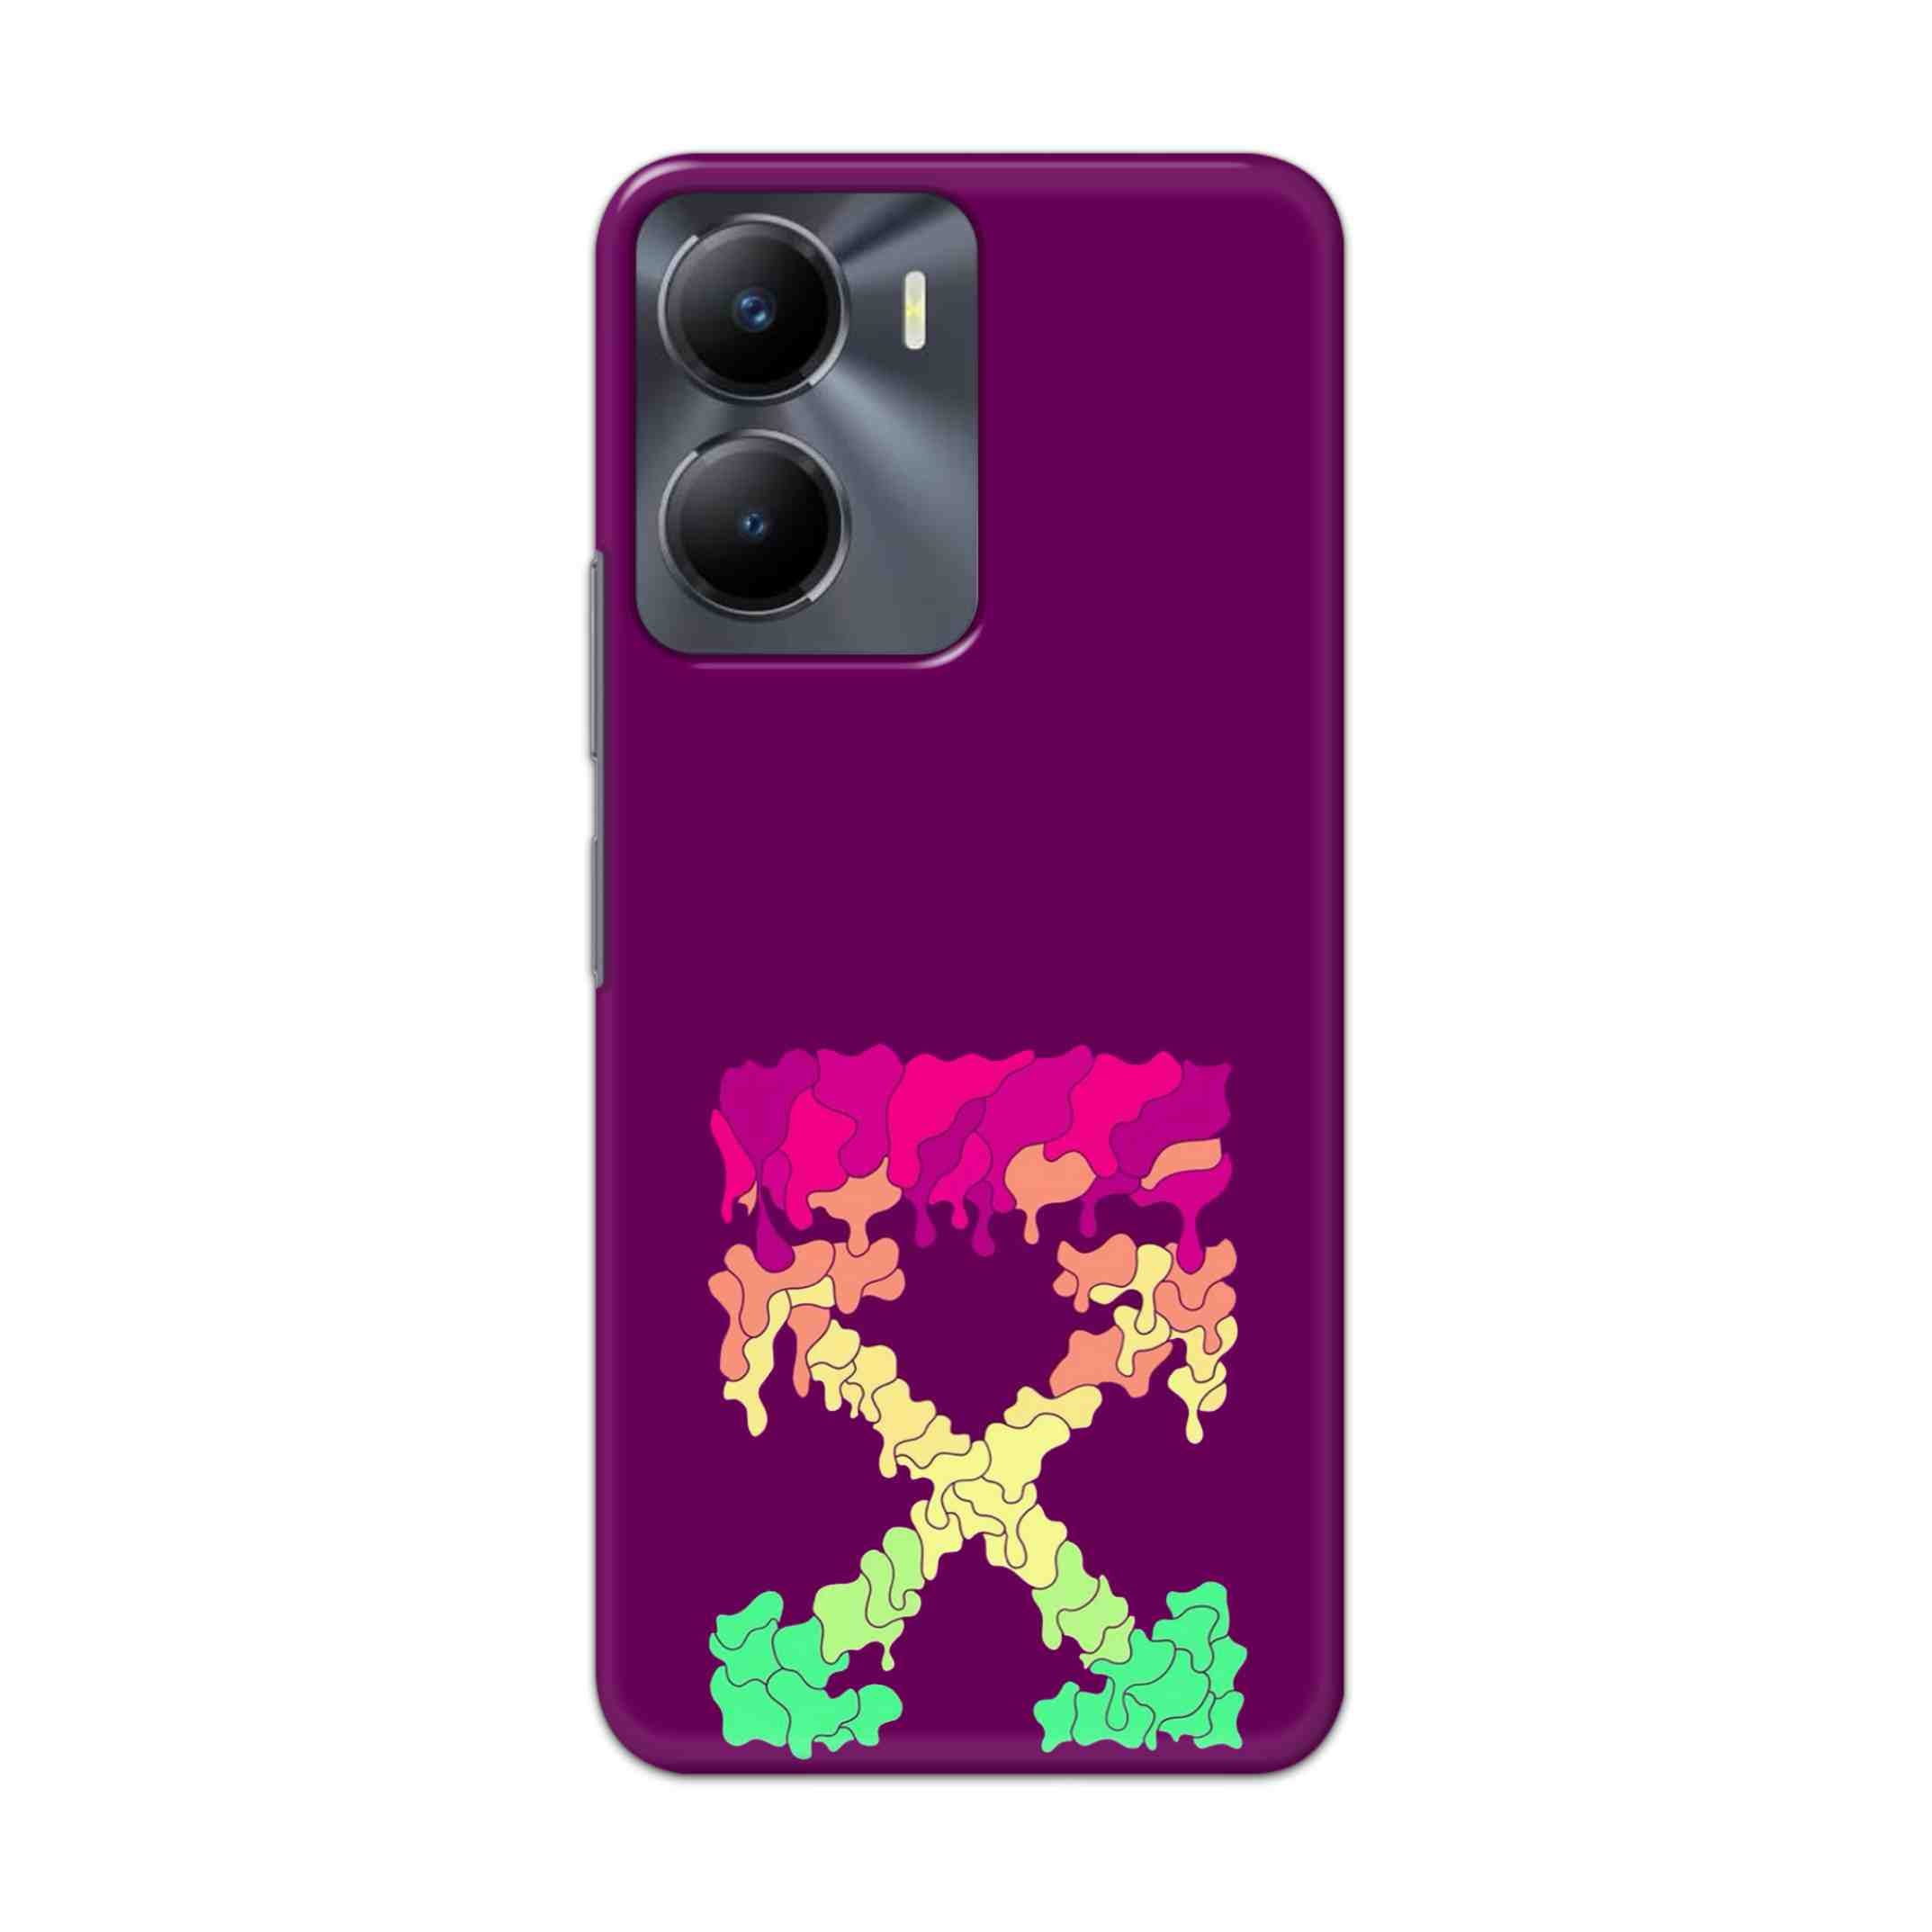 Buy X.O Hard Back Mobile Phone Case Cover For Vivo Y56 Online